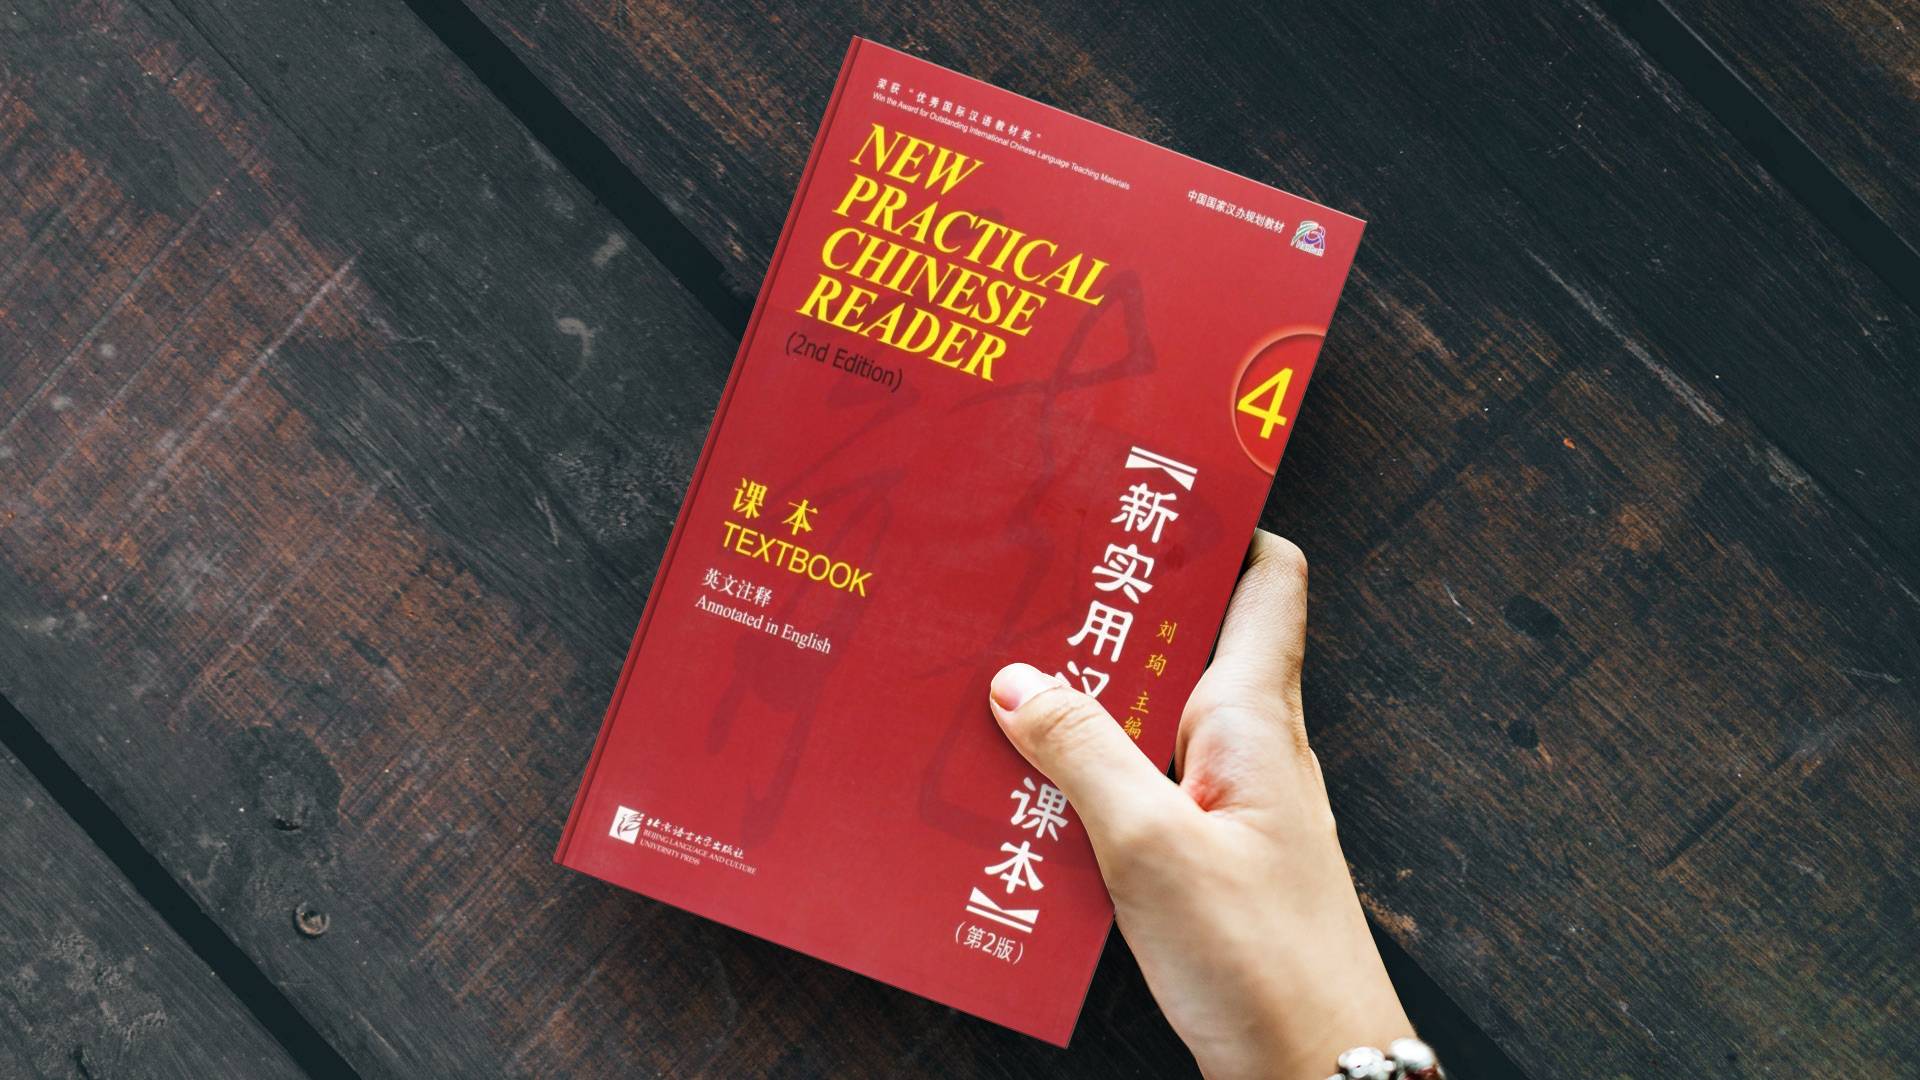 خرید کتاب زبان چینی | فروشگاه اینترنتی کتاب زبان | New Practical Chinese Reader Volume 4 Workbook 2nd Edition | نیو پرکتیکال چاینیز ریدر ورک بوک چهار ویرایش دوم